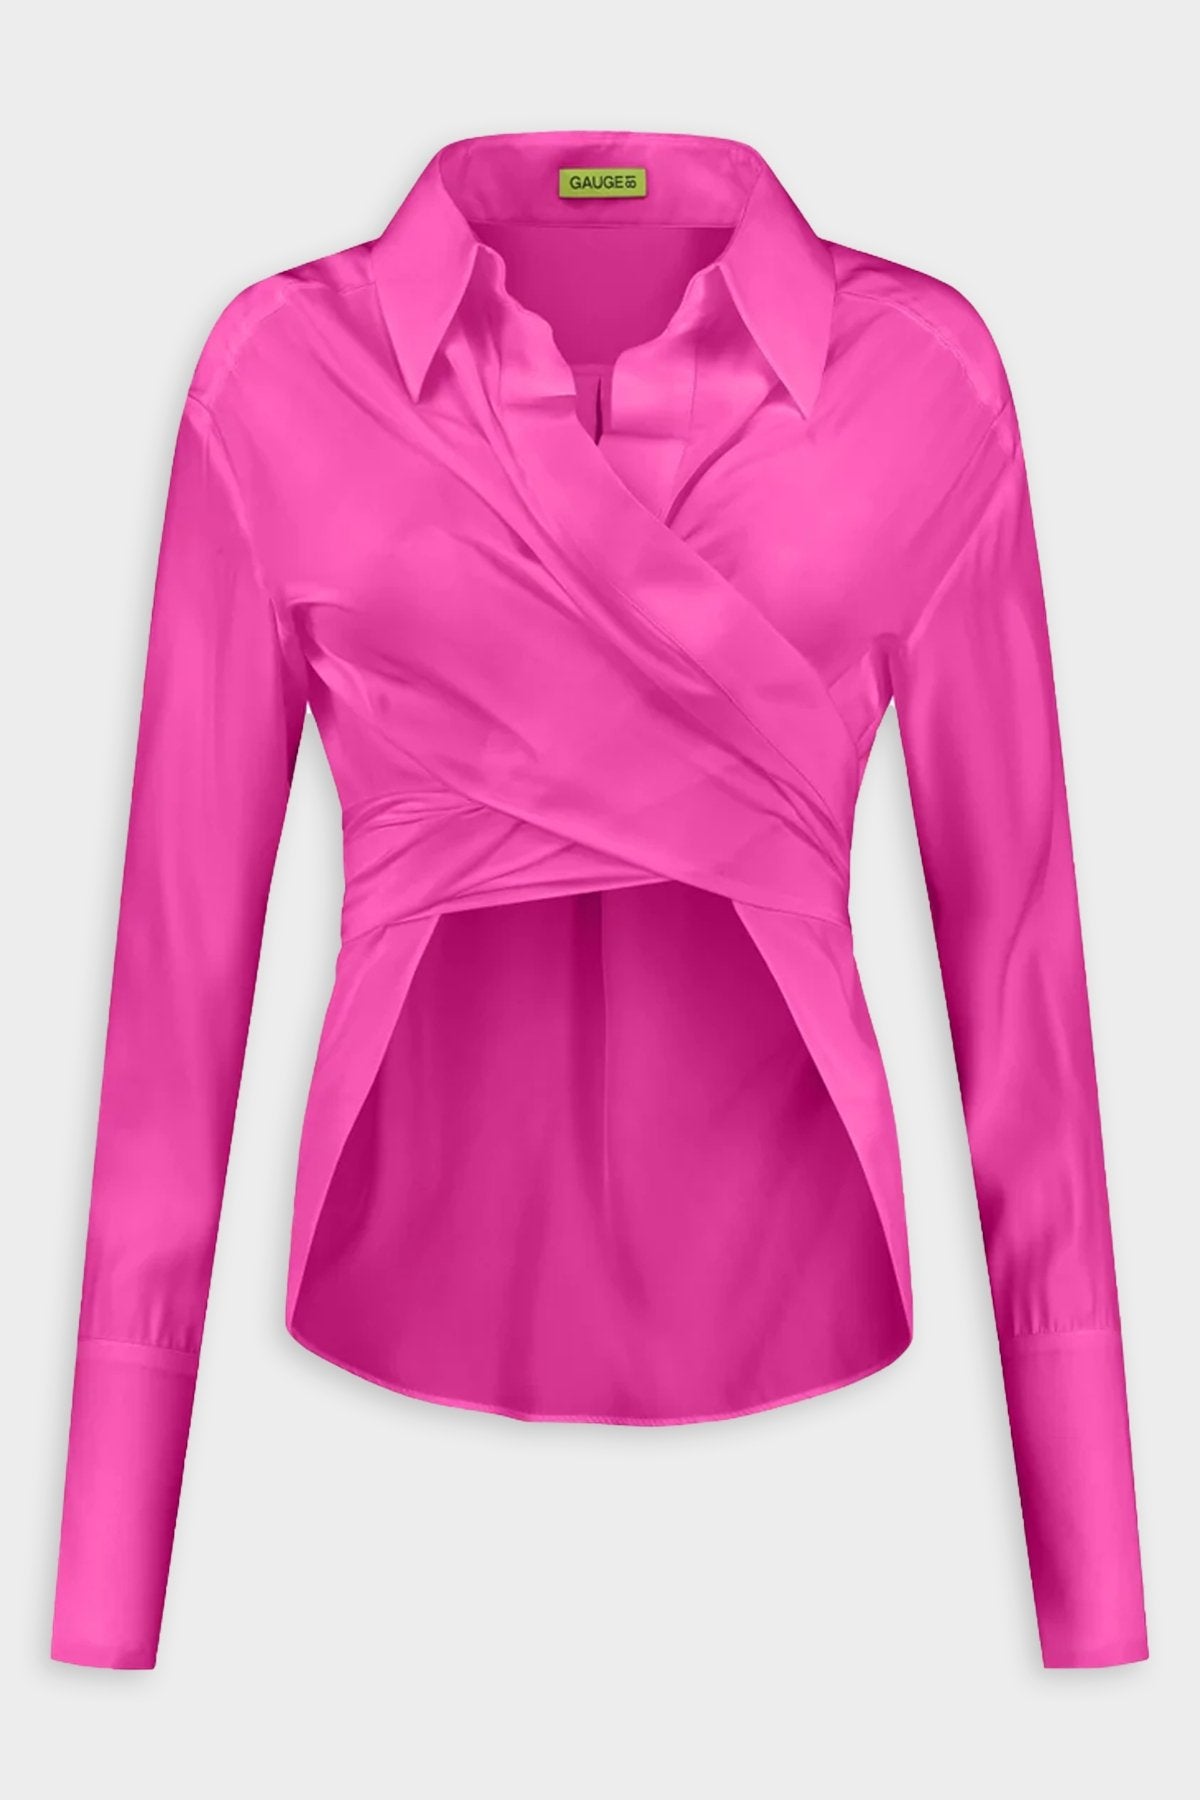 Sabinas Silk Shirt in Hot Pink - shop-olivia.com